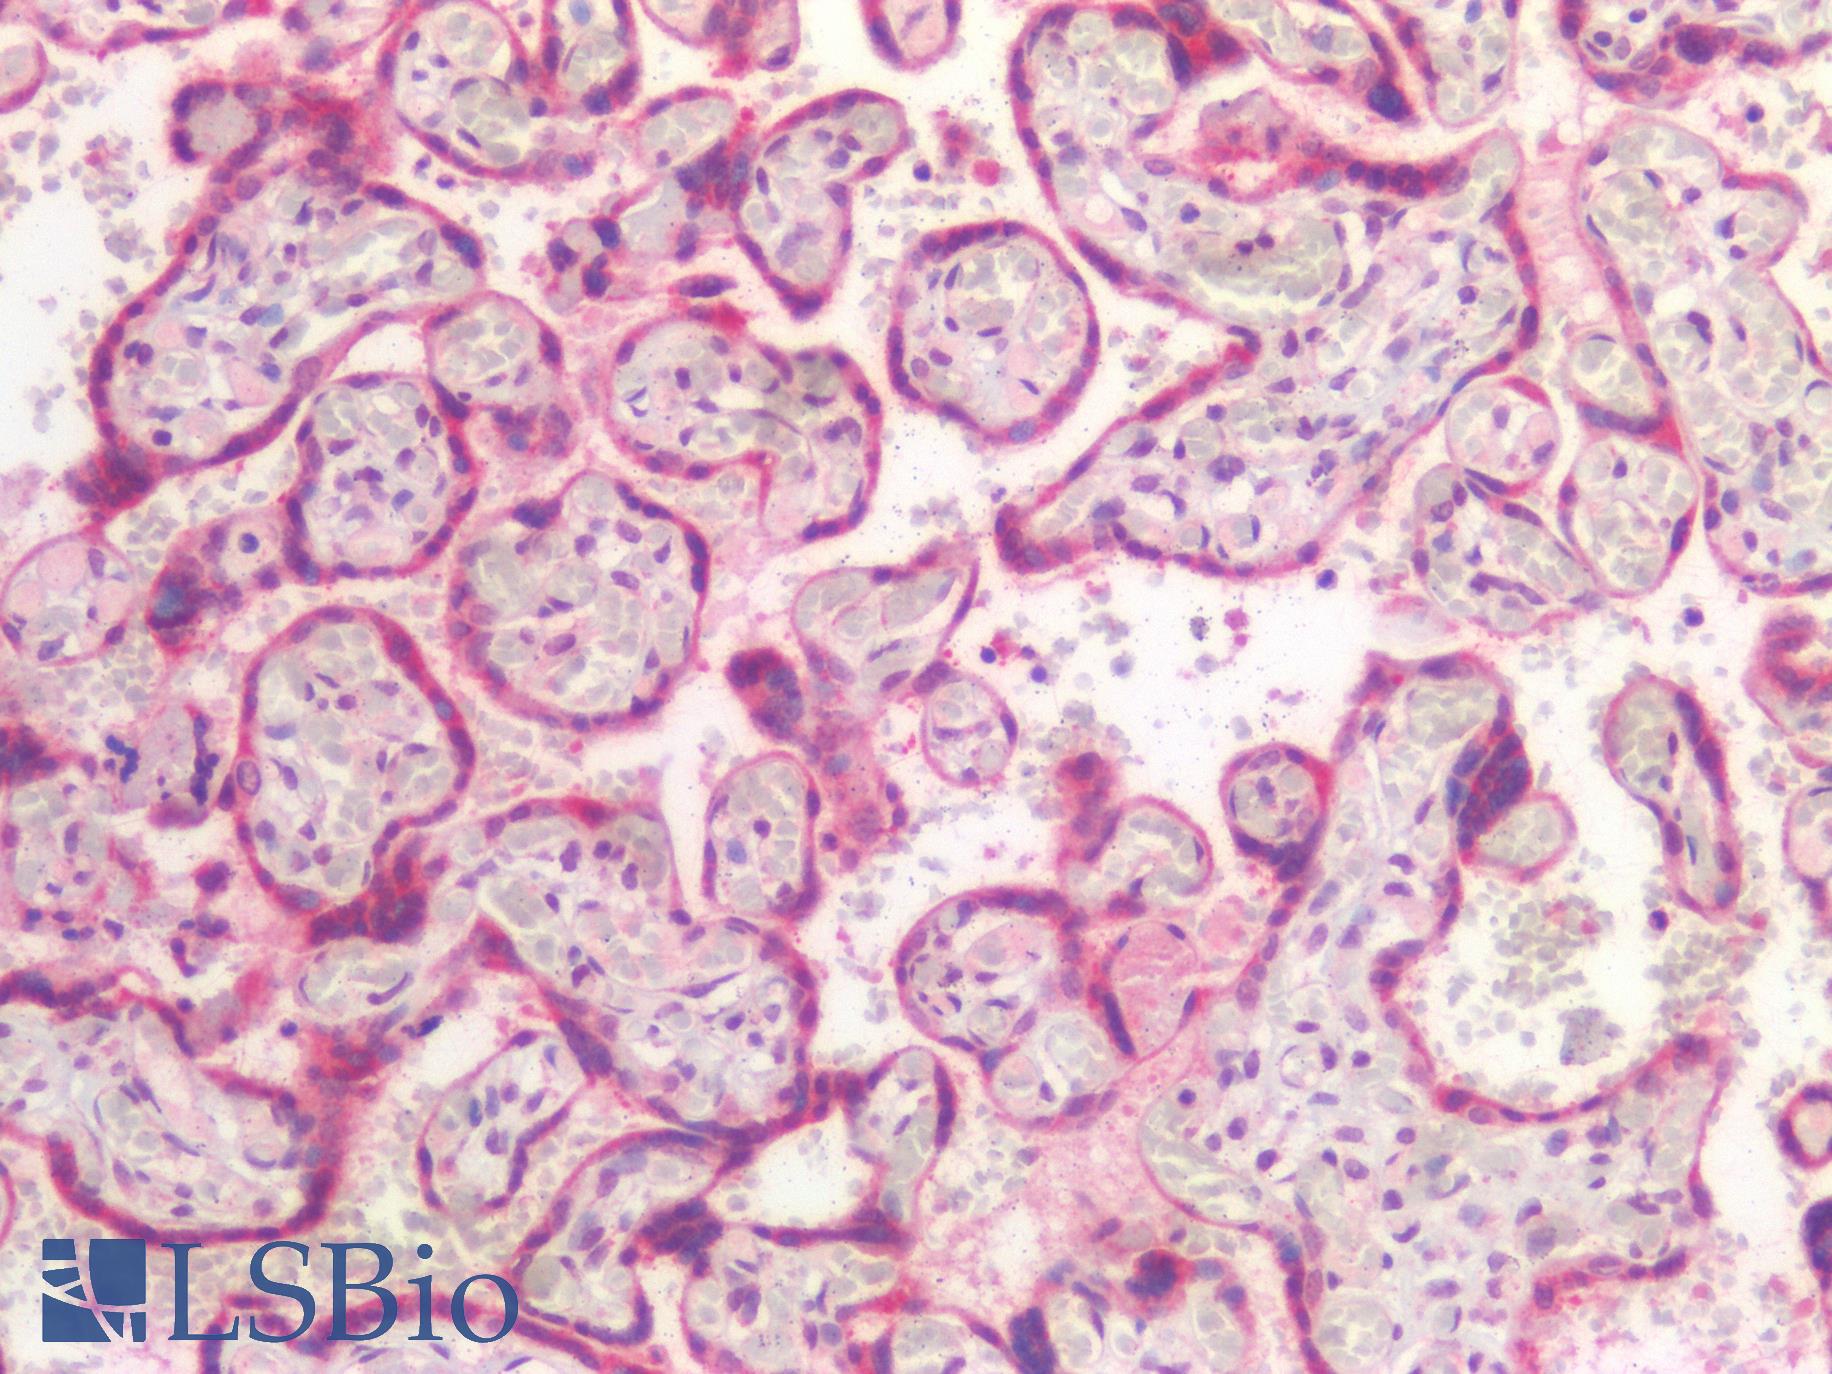 USP19 Antibody - Human Placenta: Formalin-Fixed, Paraffin-Embedded (FFPE)